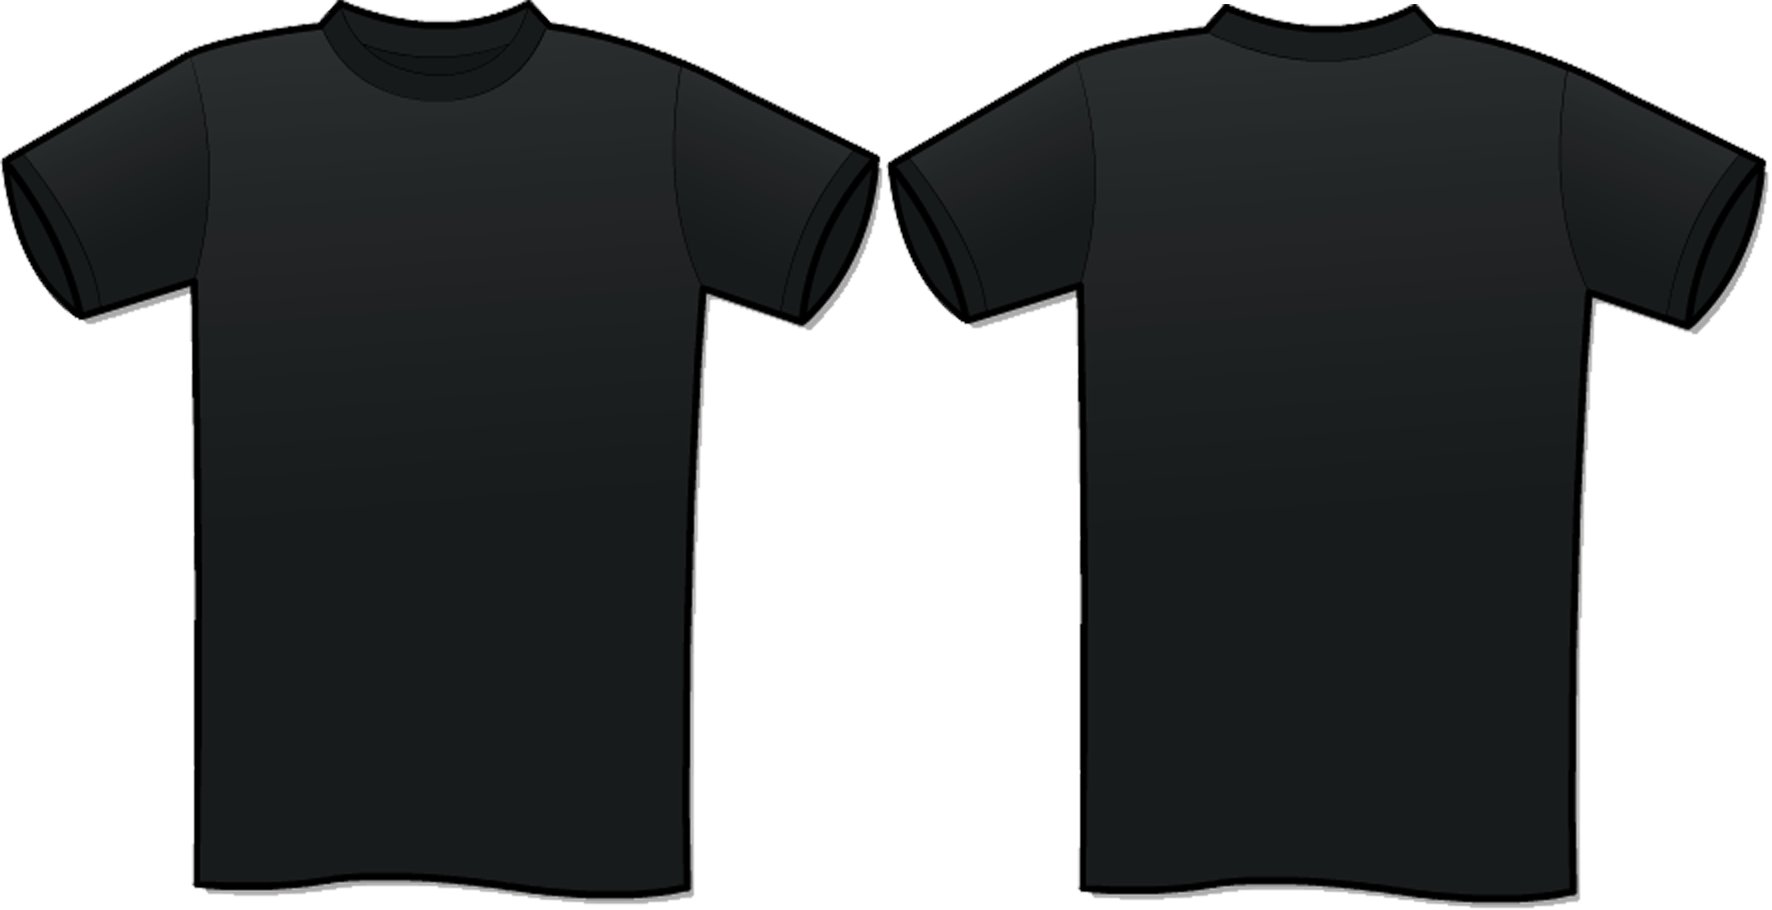 Blank Black T Shirt Template malaydaedae